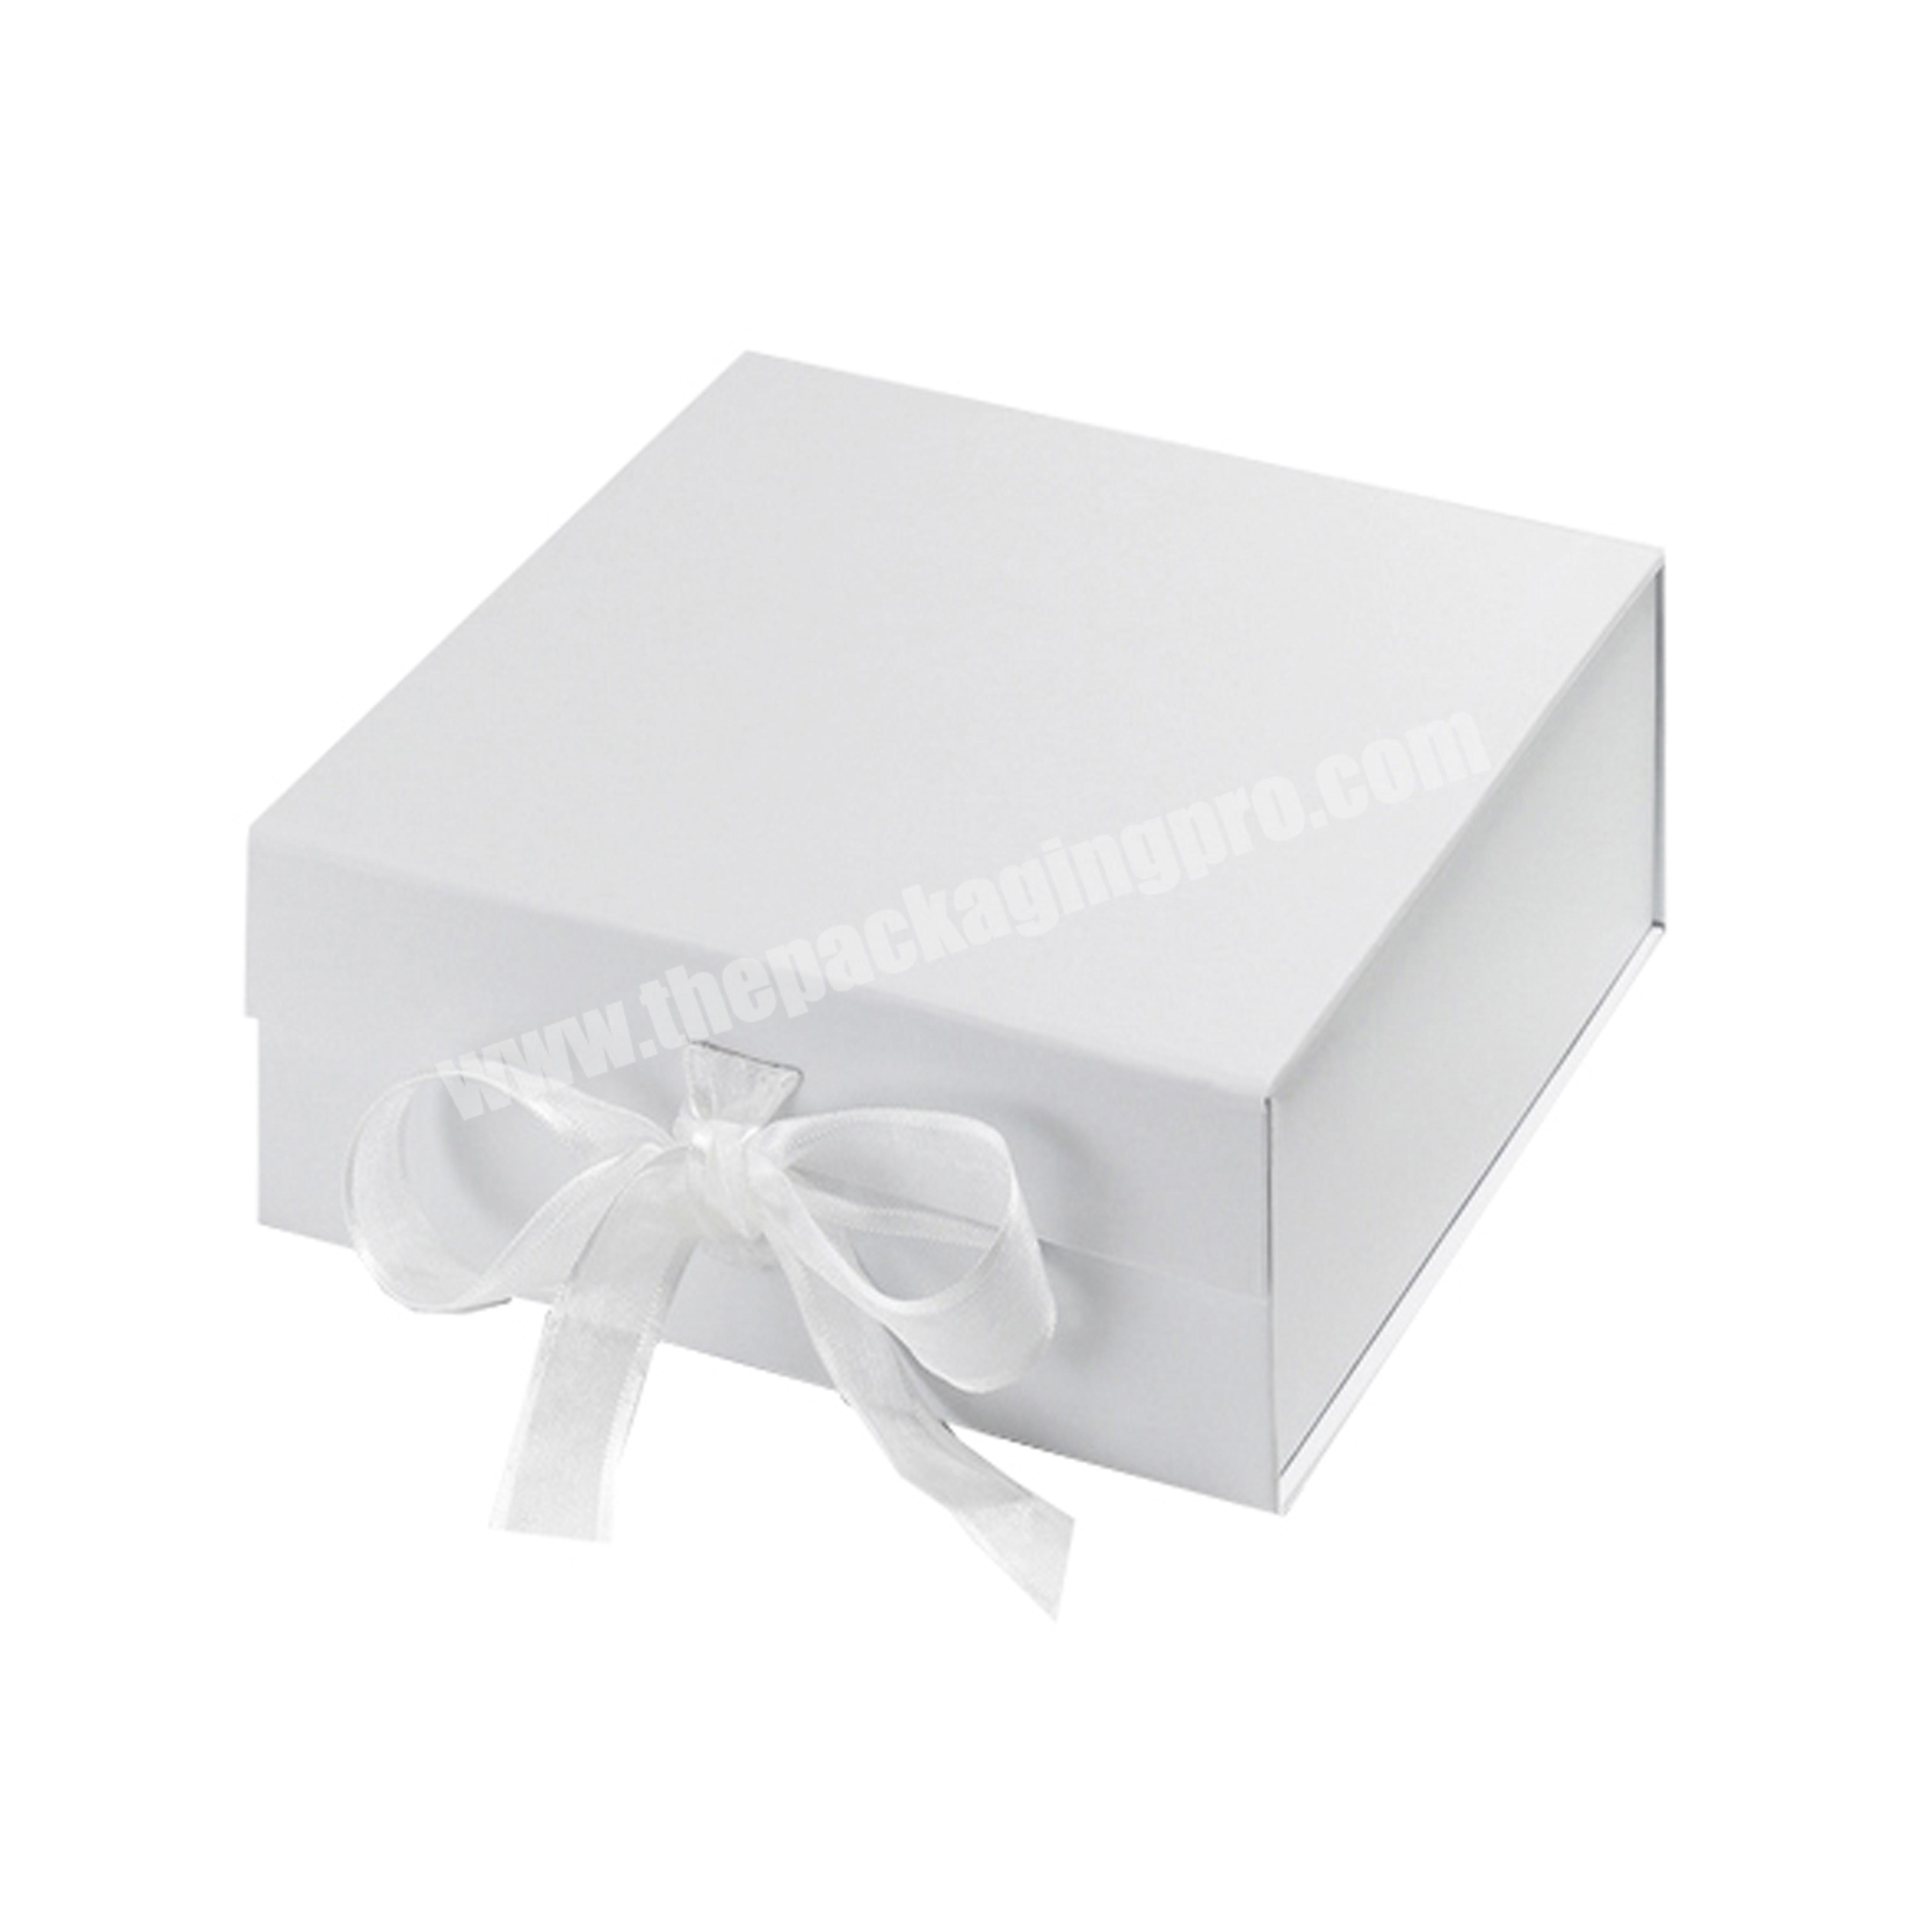 Custom logo printed white lingerie gift box with ribbon